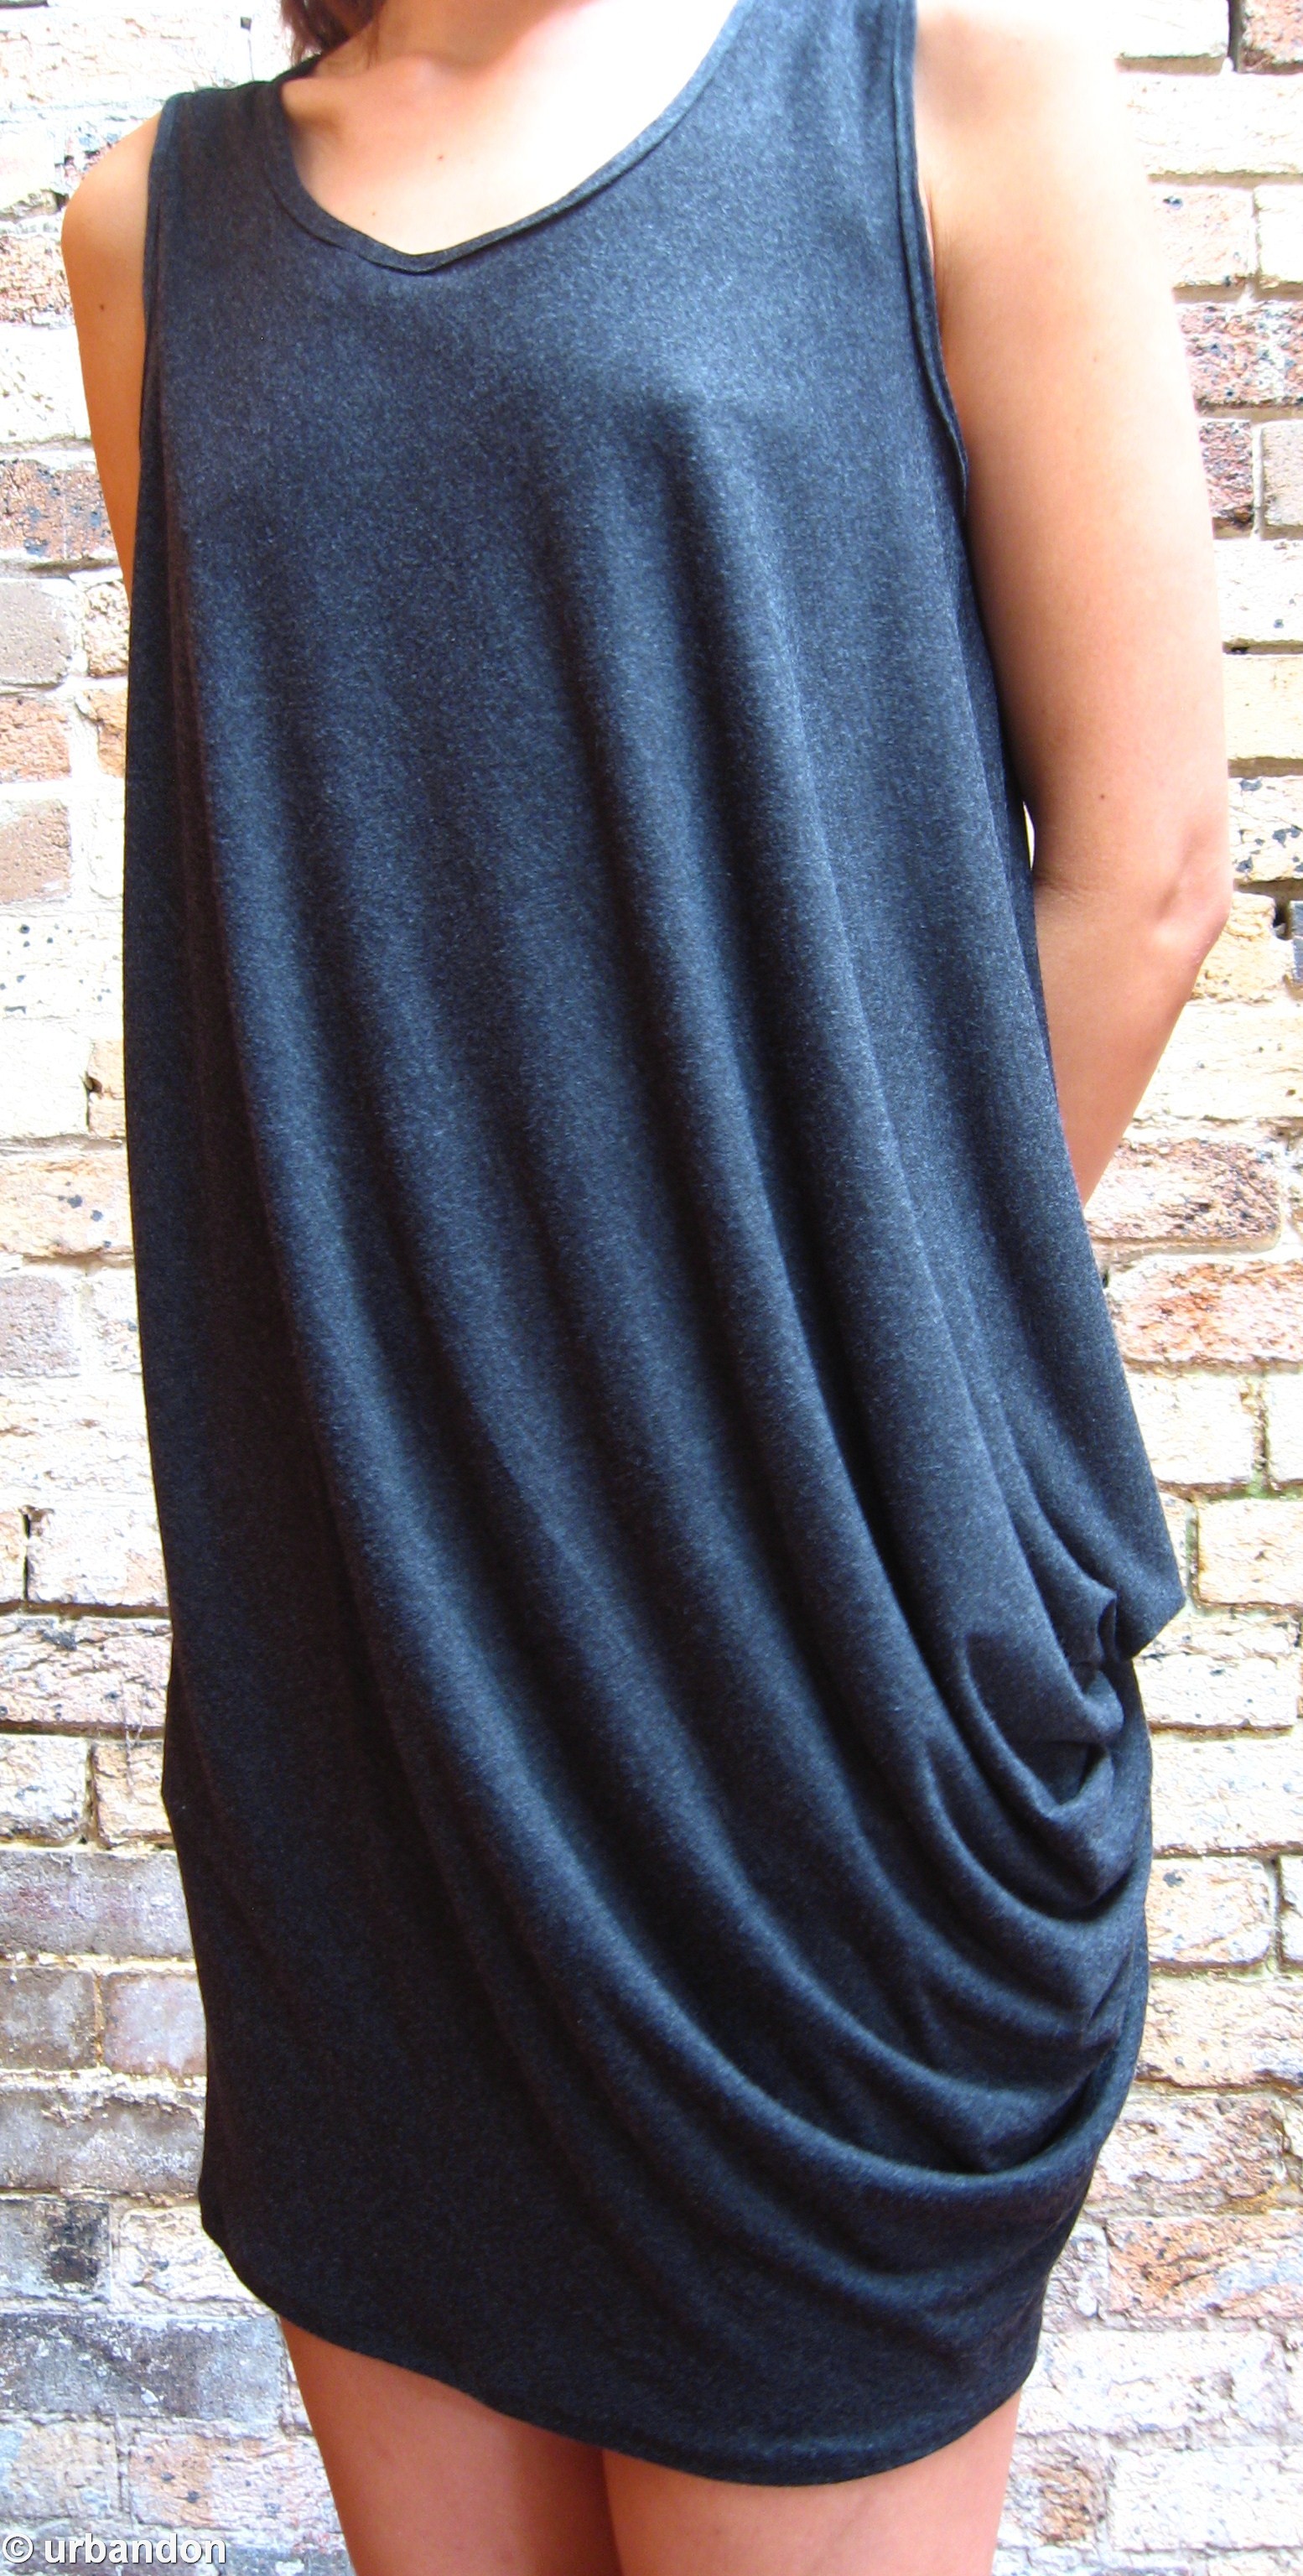 Drape Drape 2 - Drape Singlet by urbandon – Sewing Projects ...